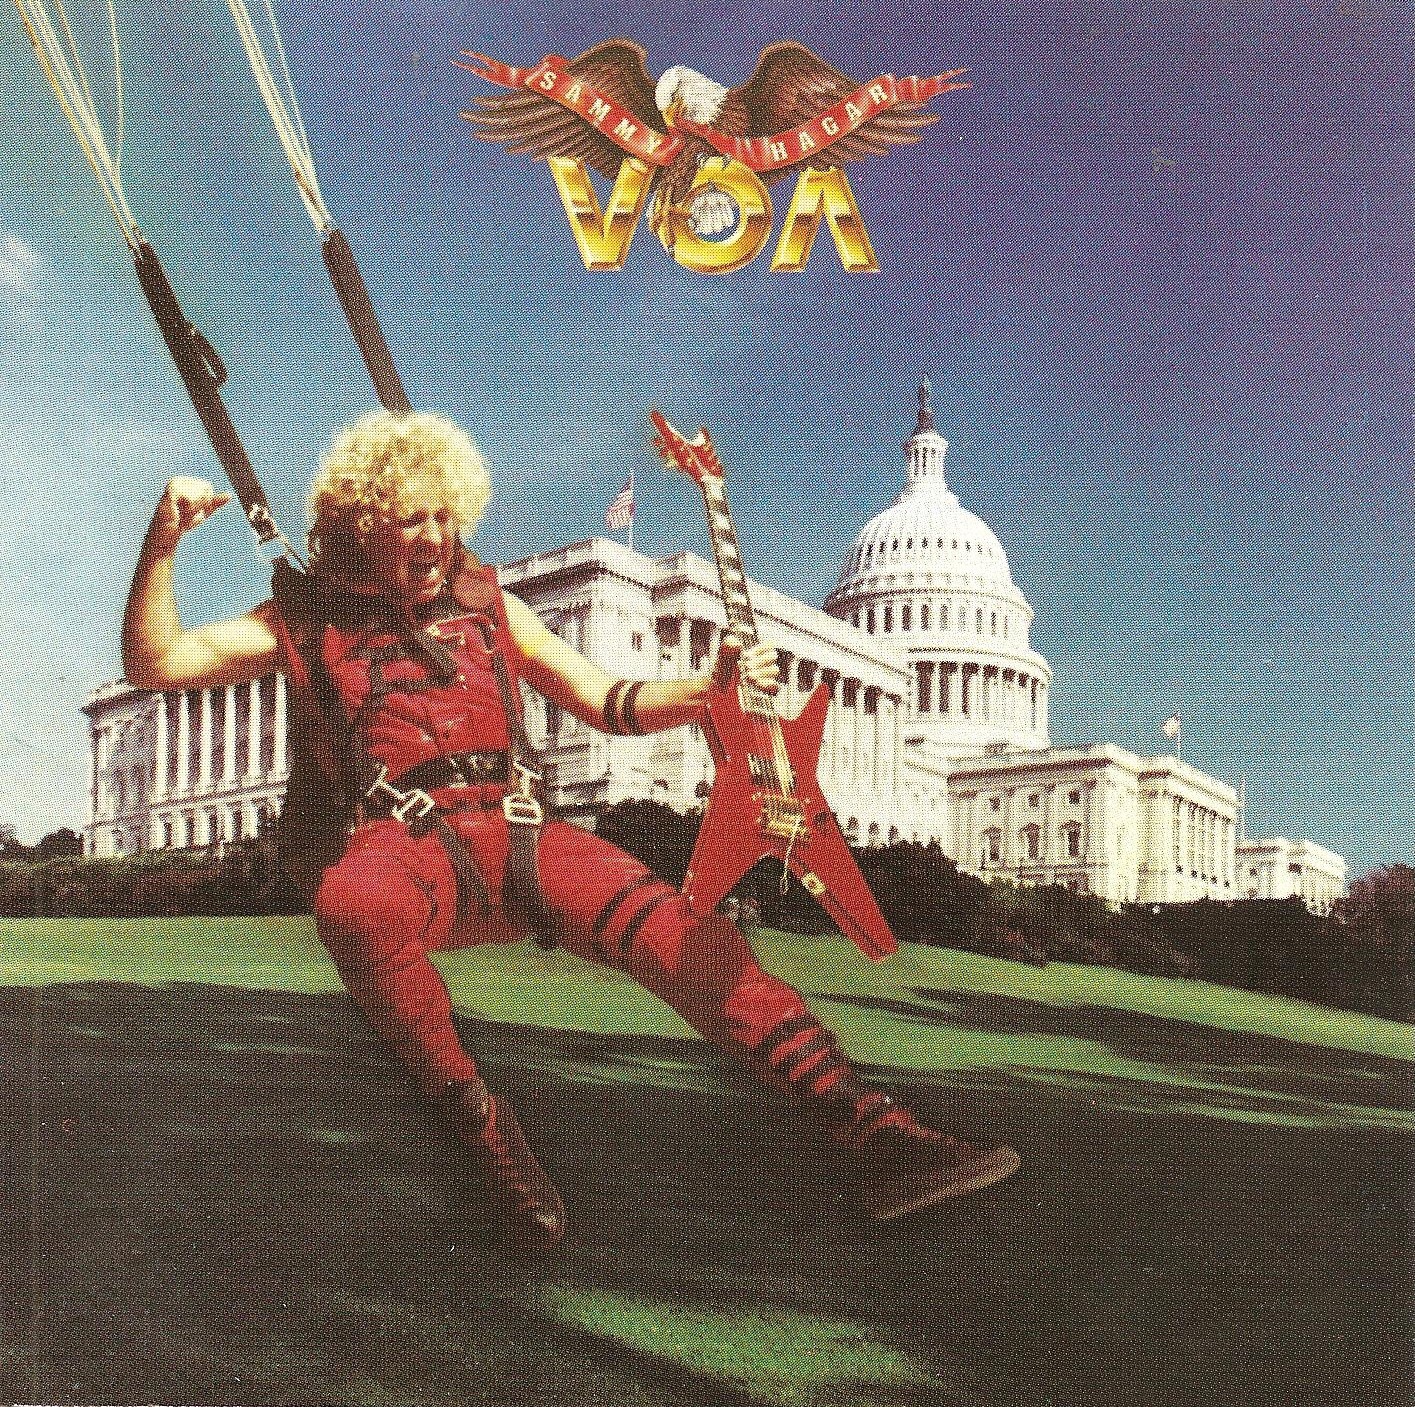 1984 Voa - cover1.jpg